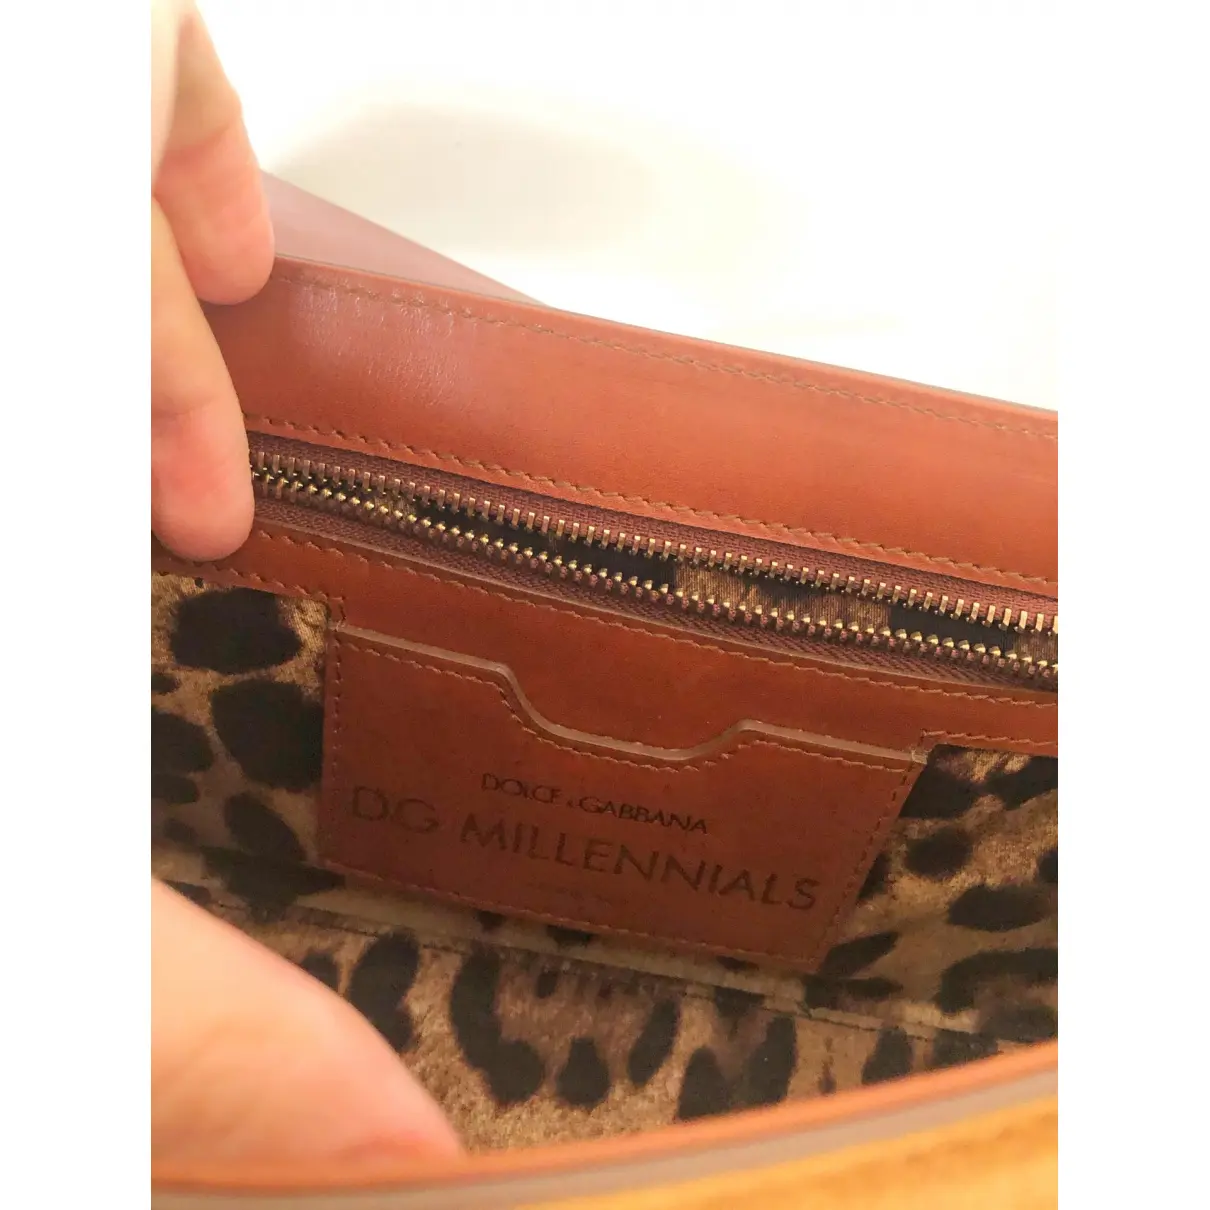 Buy Dolce & Gabbana Millenials handbag online